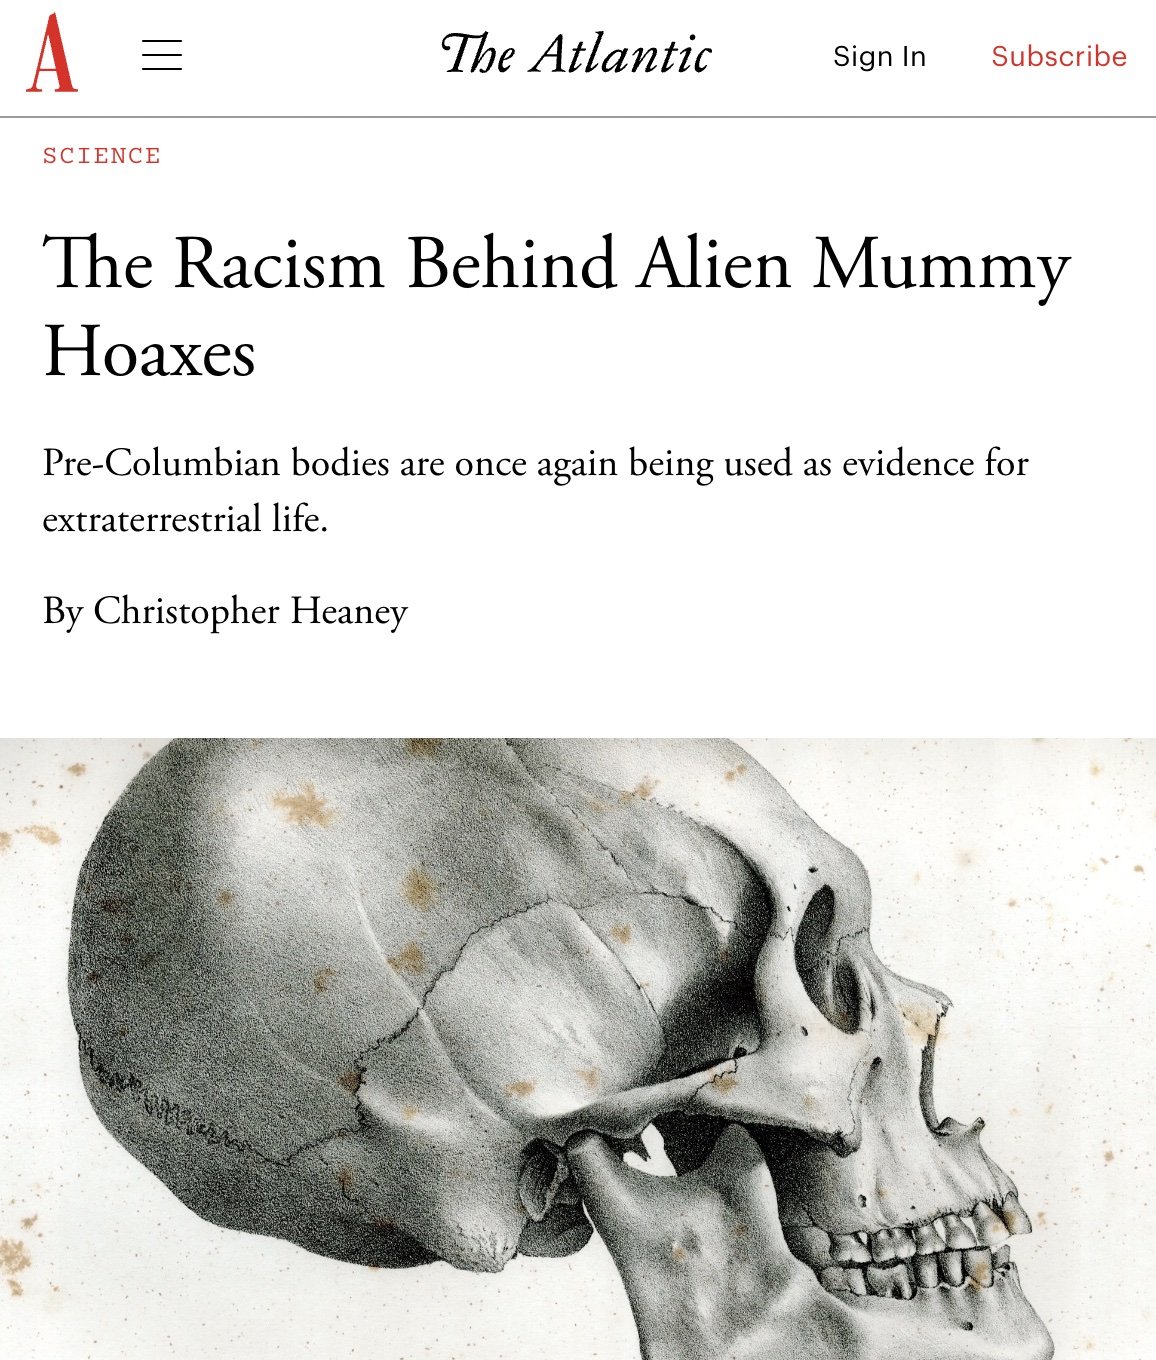 "The Racism Behind Alien Mummy Hoaxes,” TheAtlantic.com, 1 August 2017.